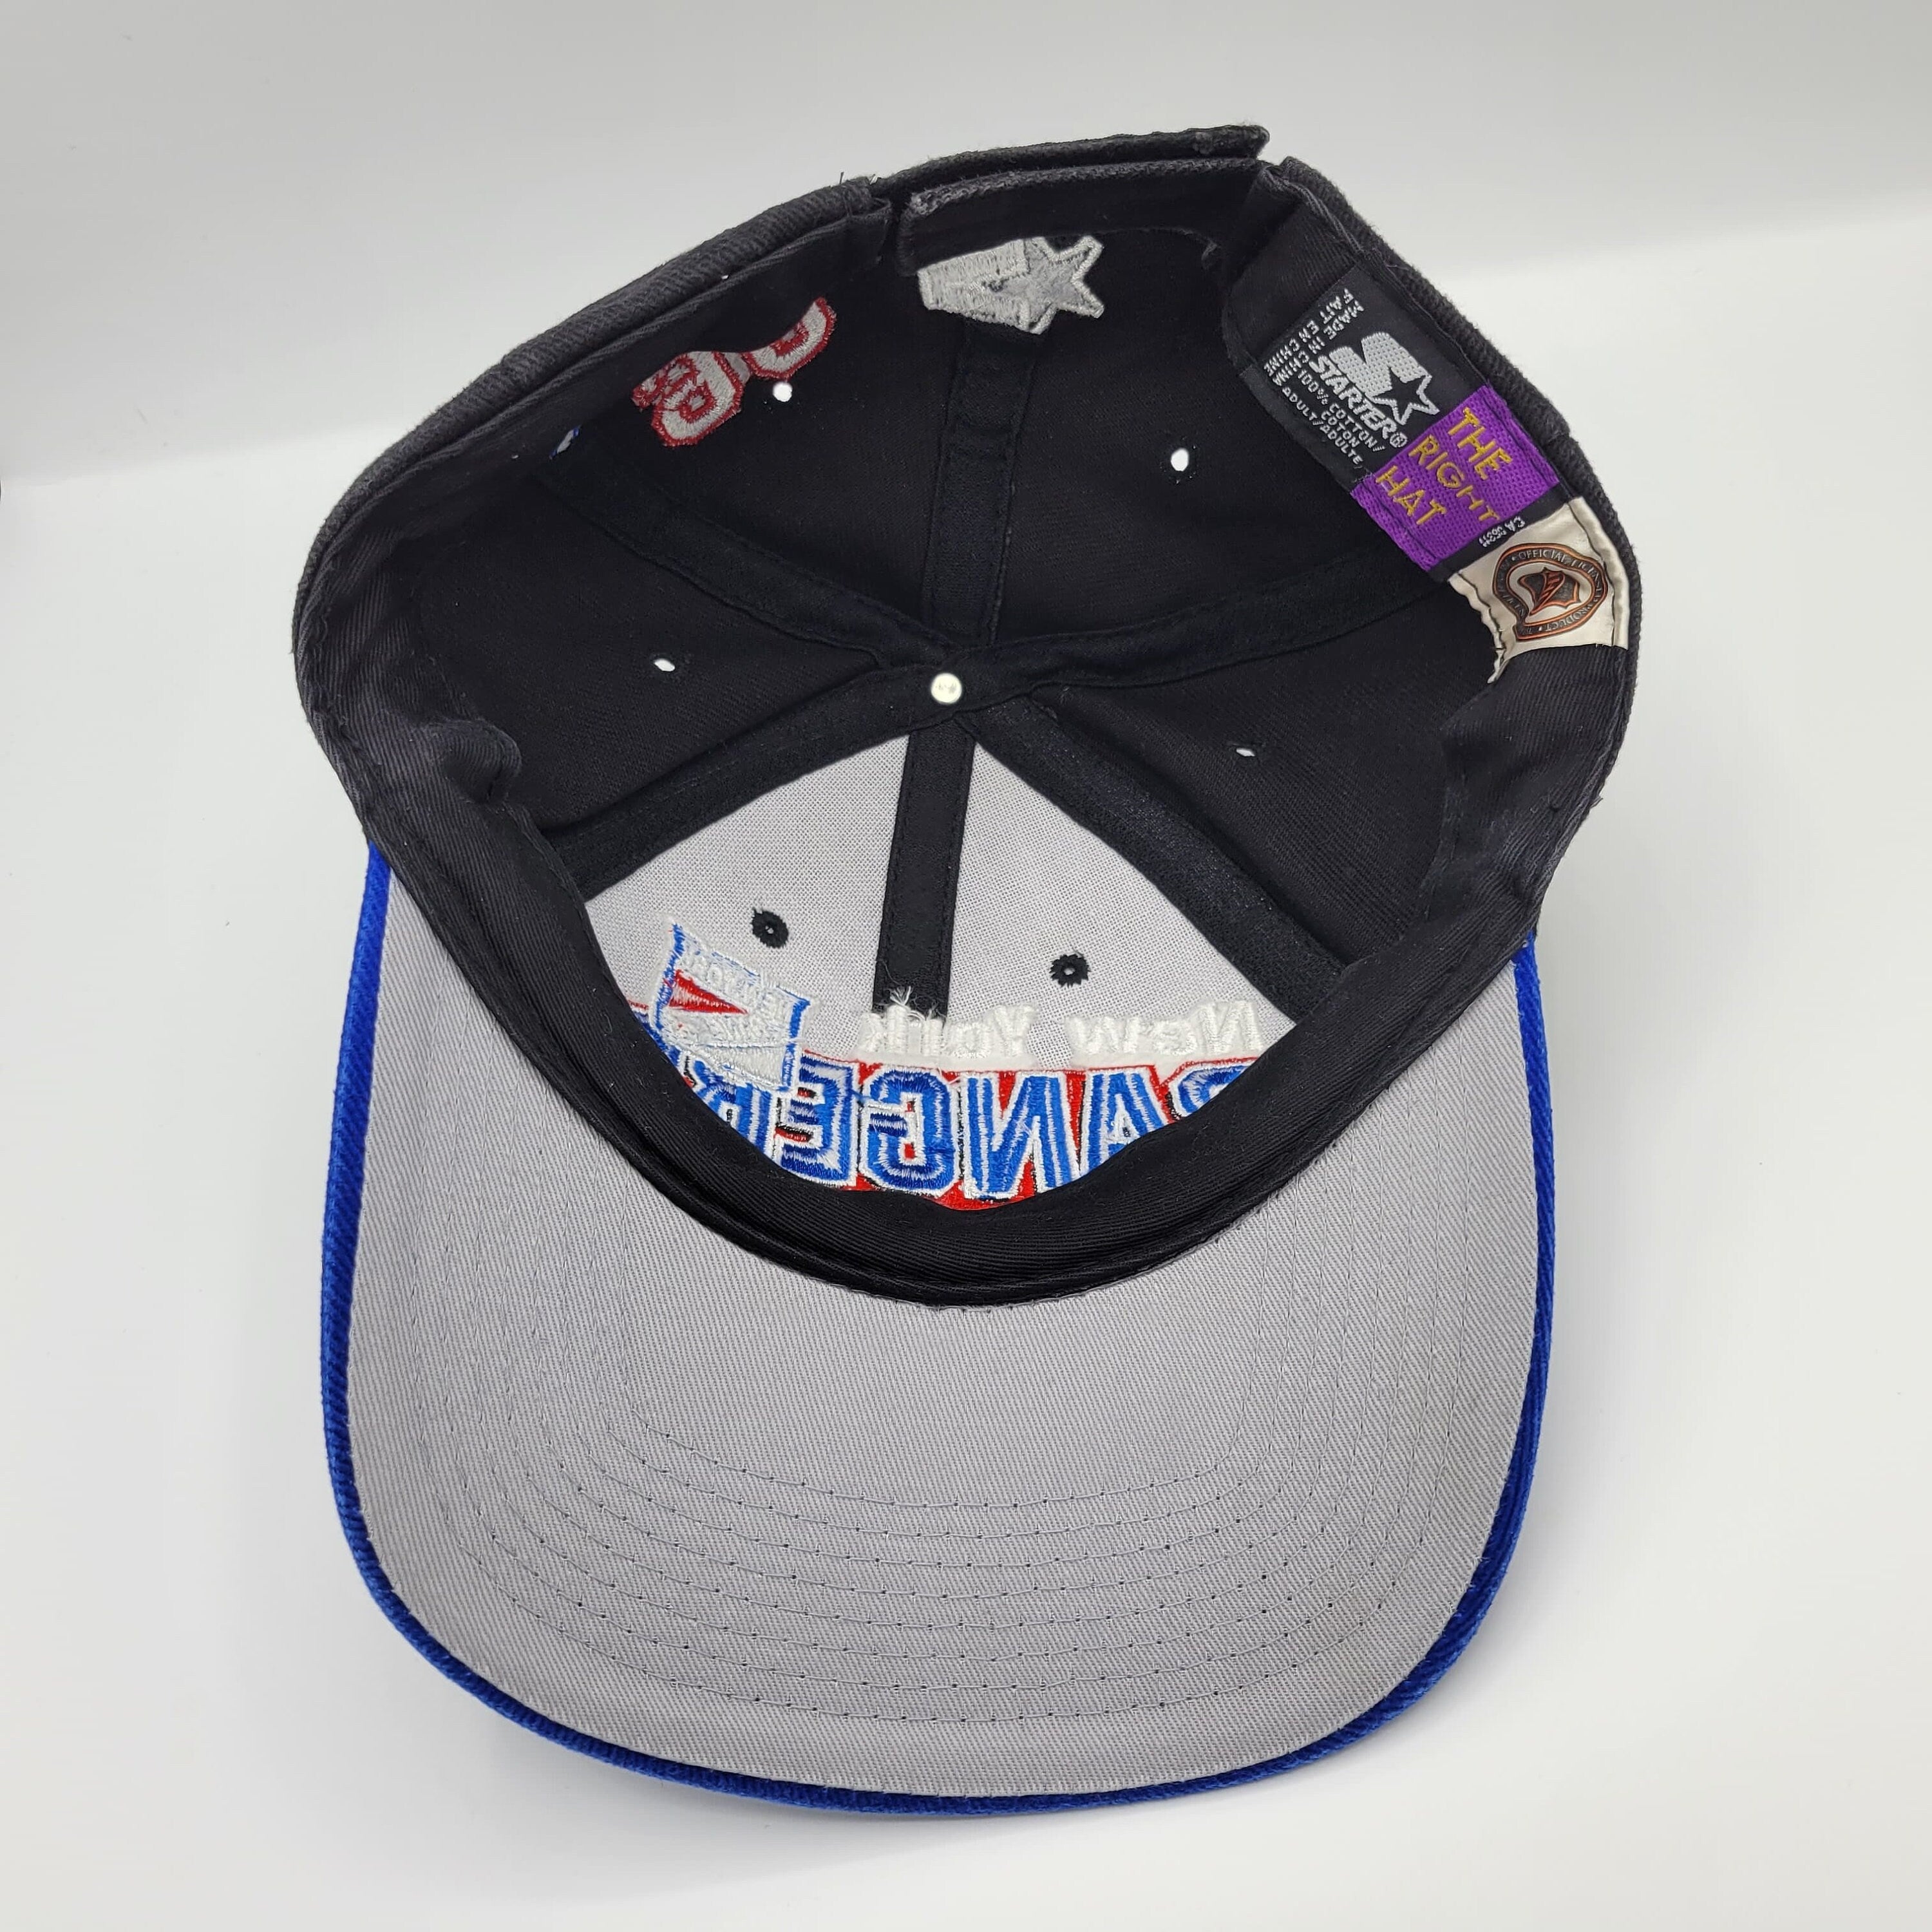 New York Rangers Vintage 90s Starter Gretzky Strapback Hat 